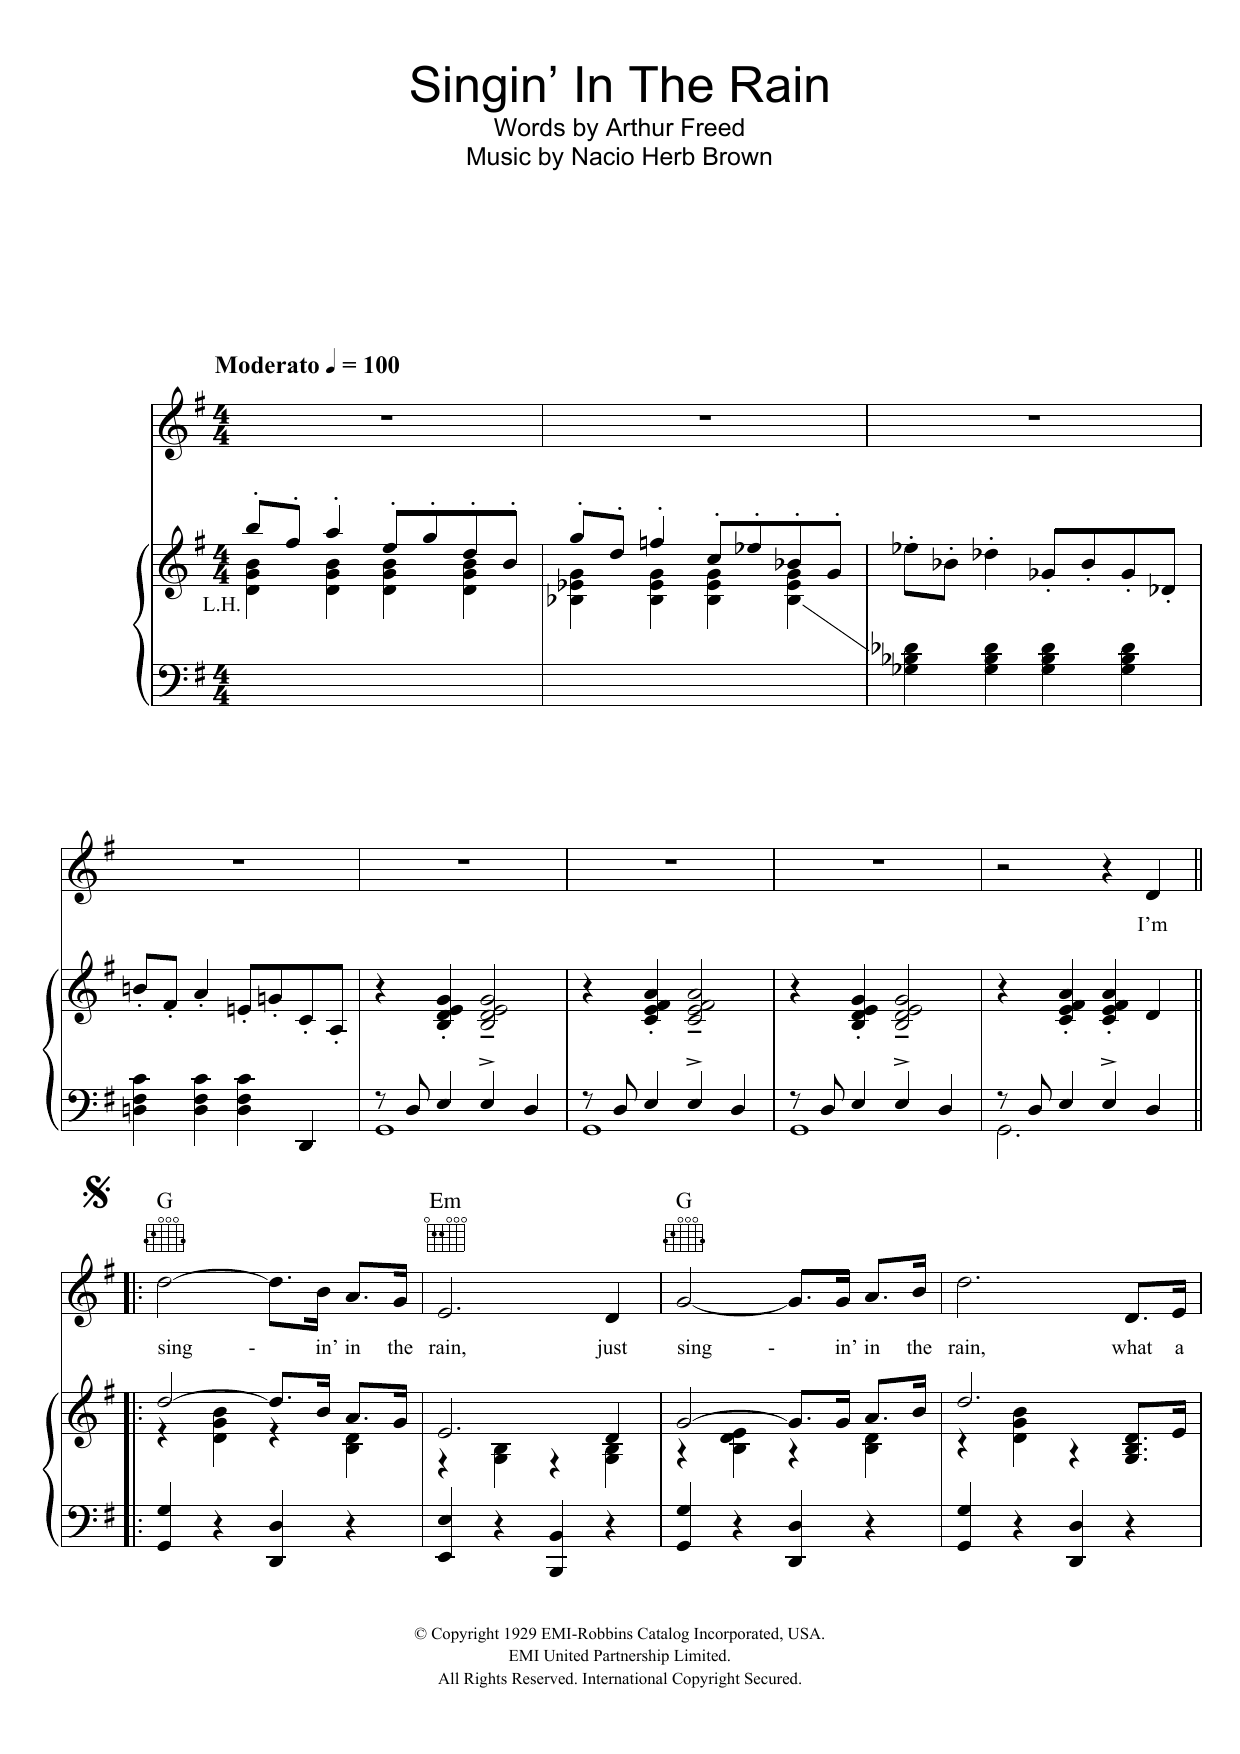 Gene Kelly Singin' In The Rain Sheet Music Notes & Chords for SAB - Download or Print PDF